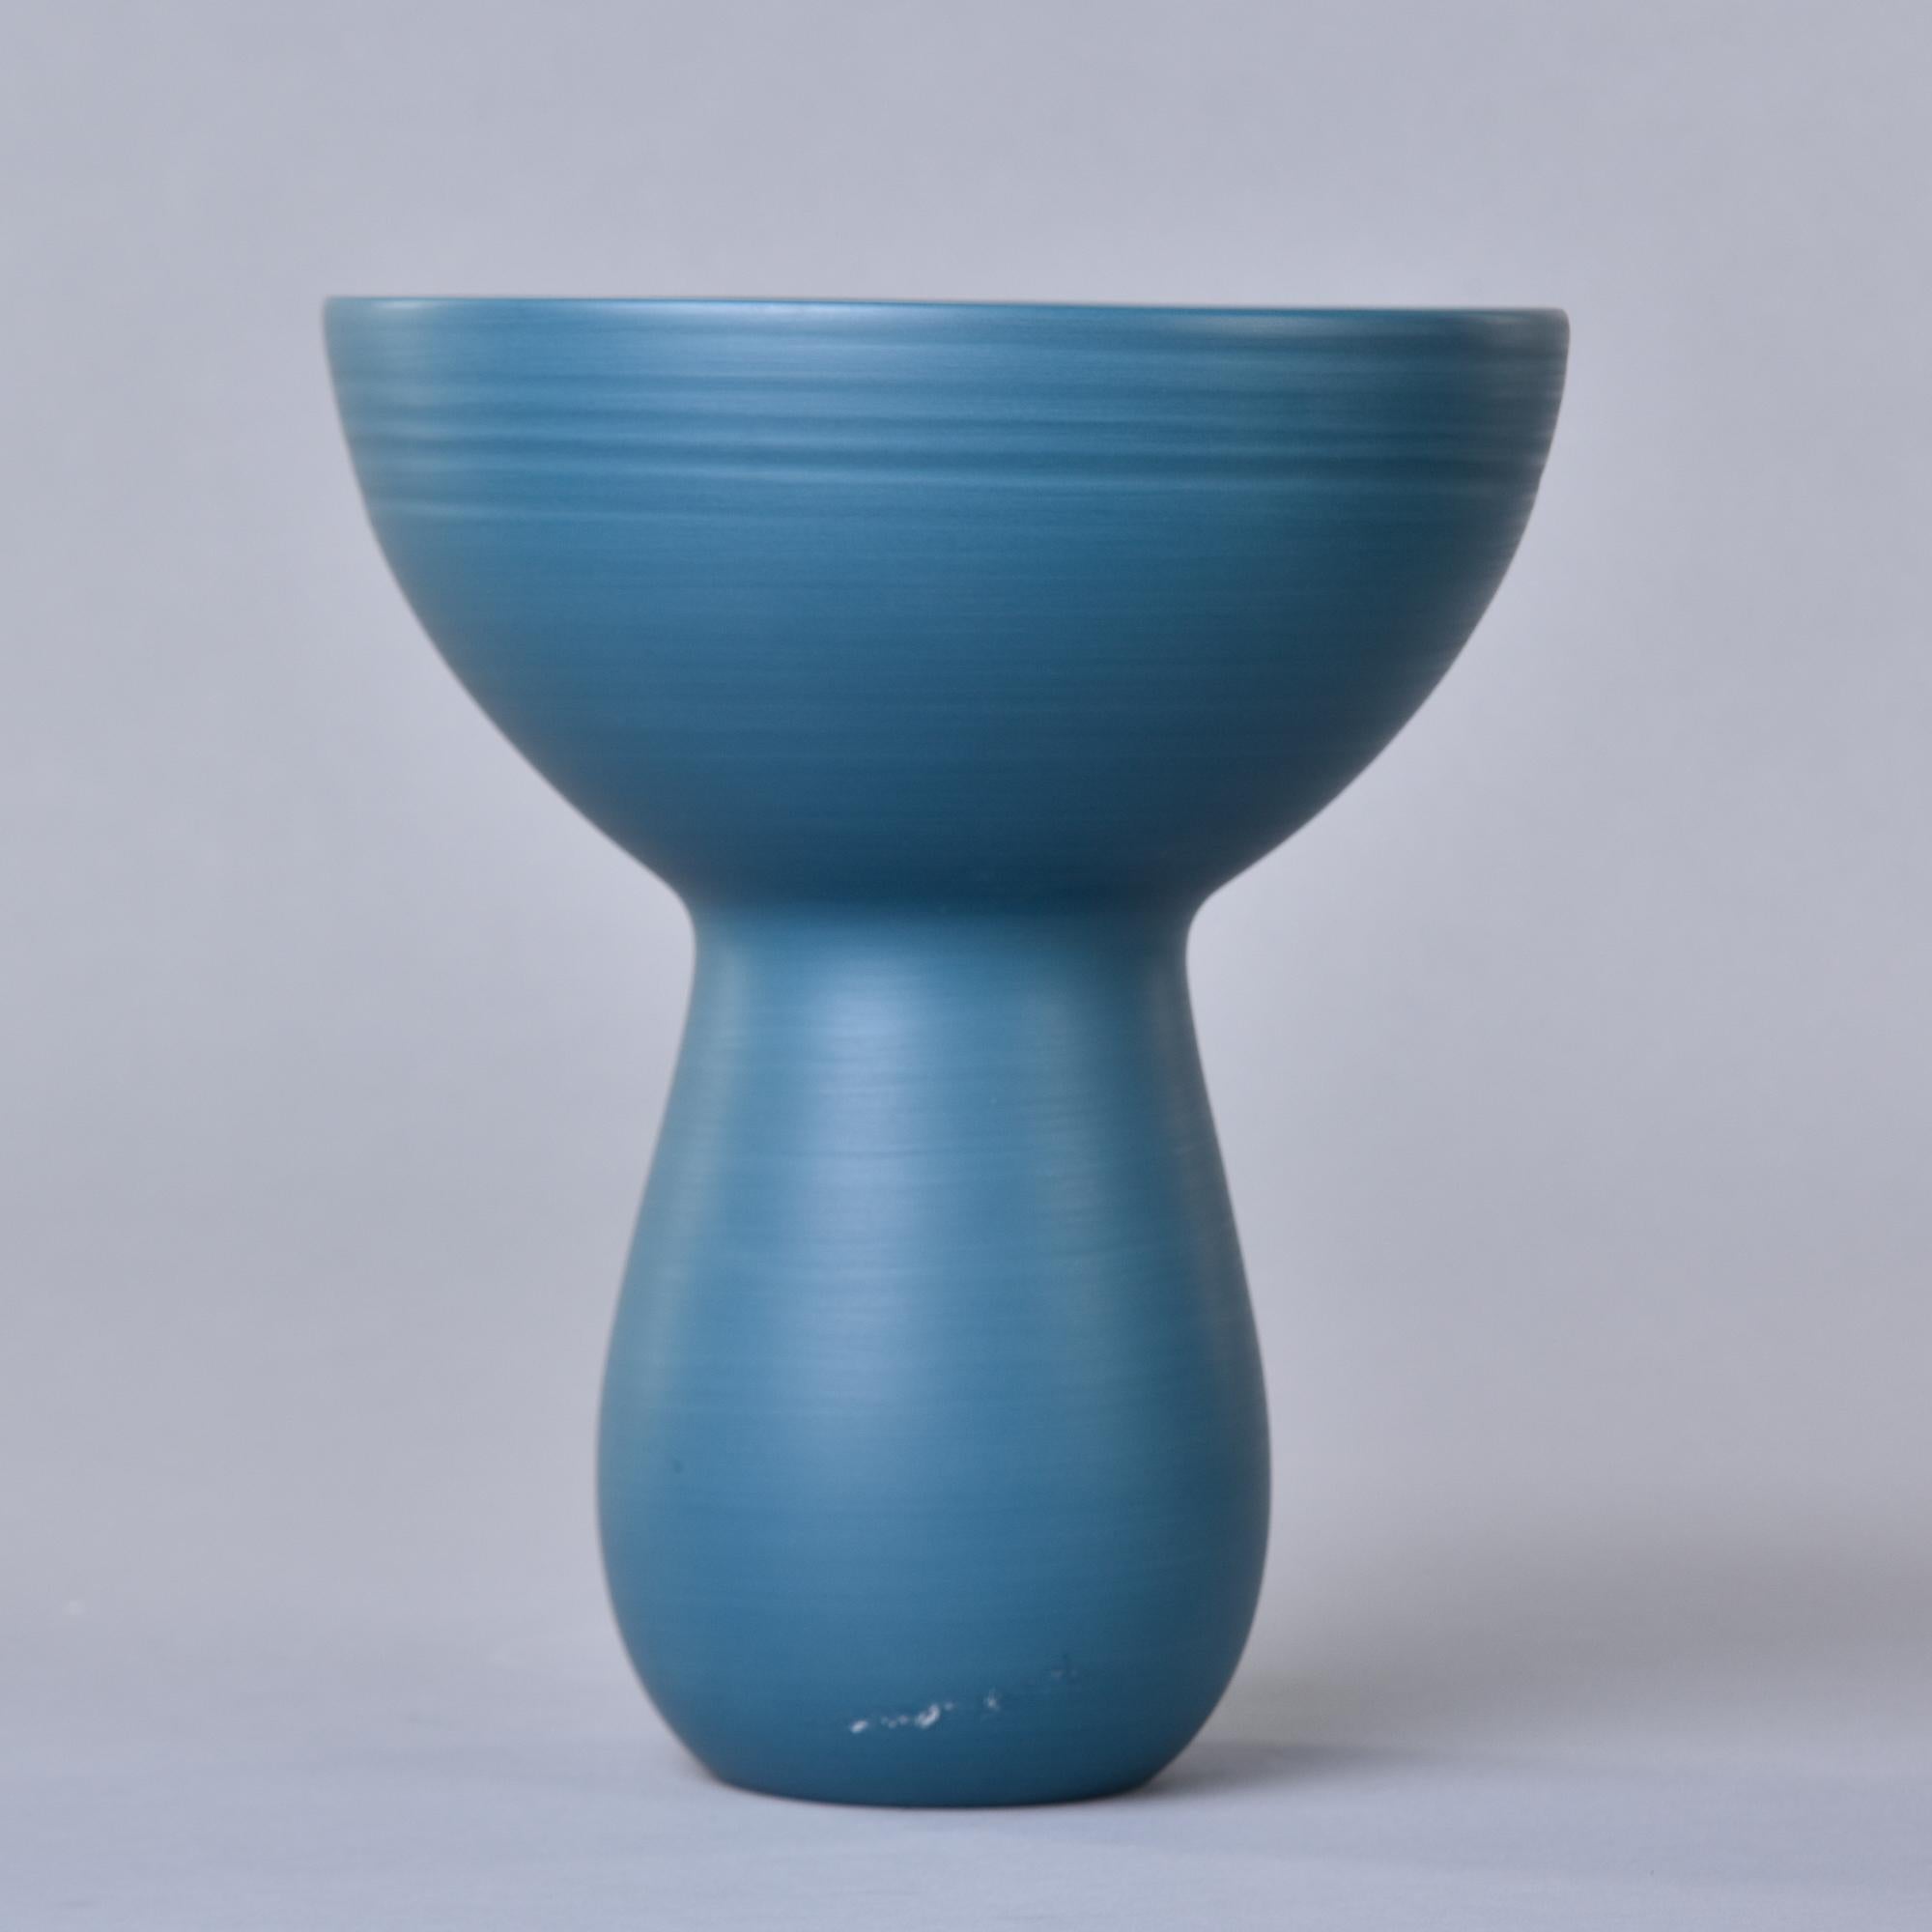 Glazed Rina Menardi Small Bouquet Vase in Teal Blue For Sale